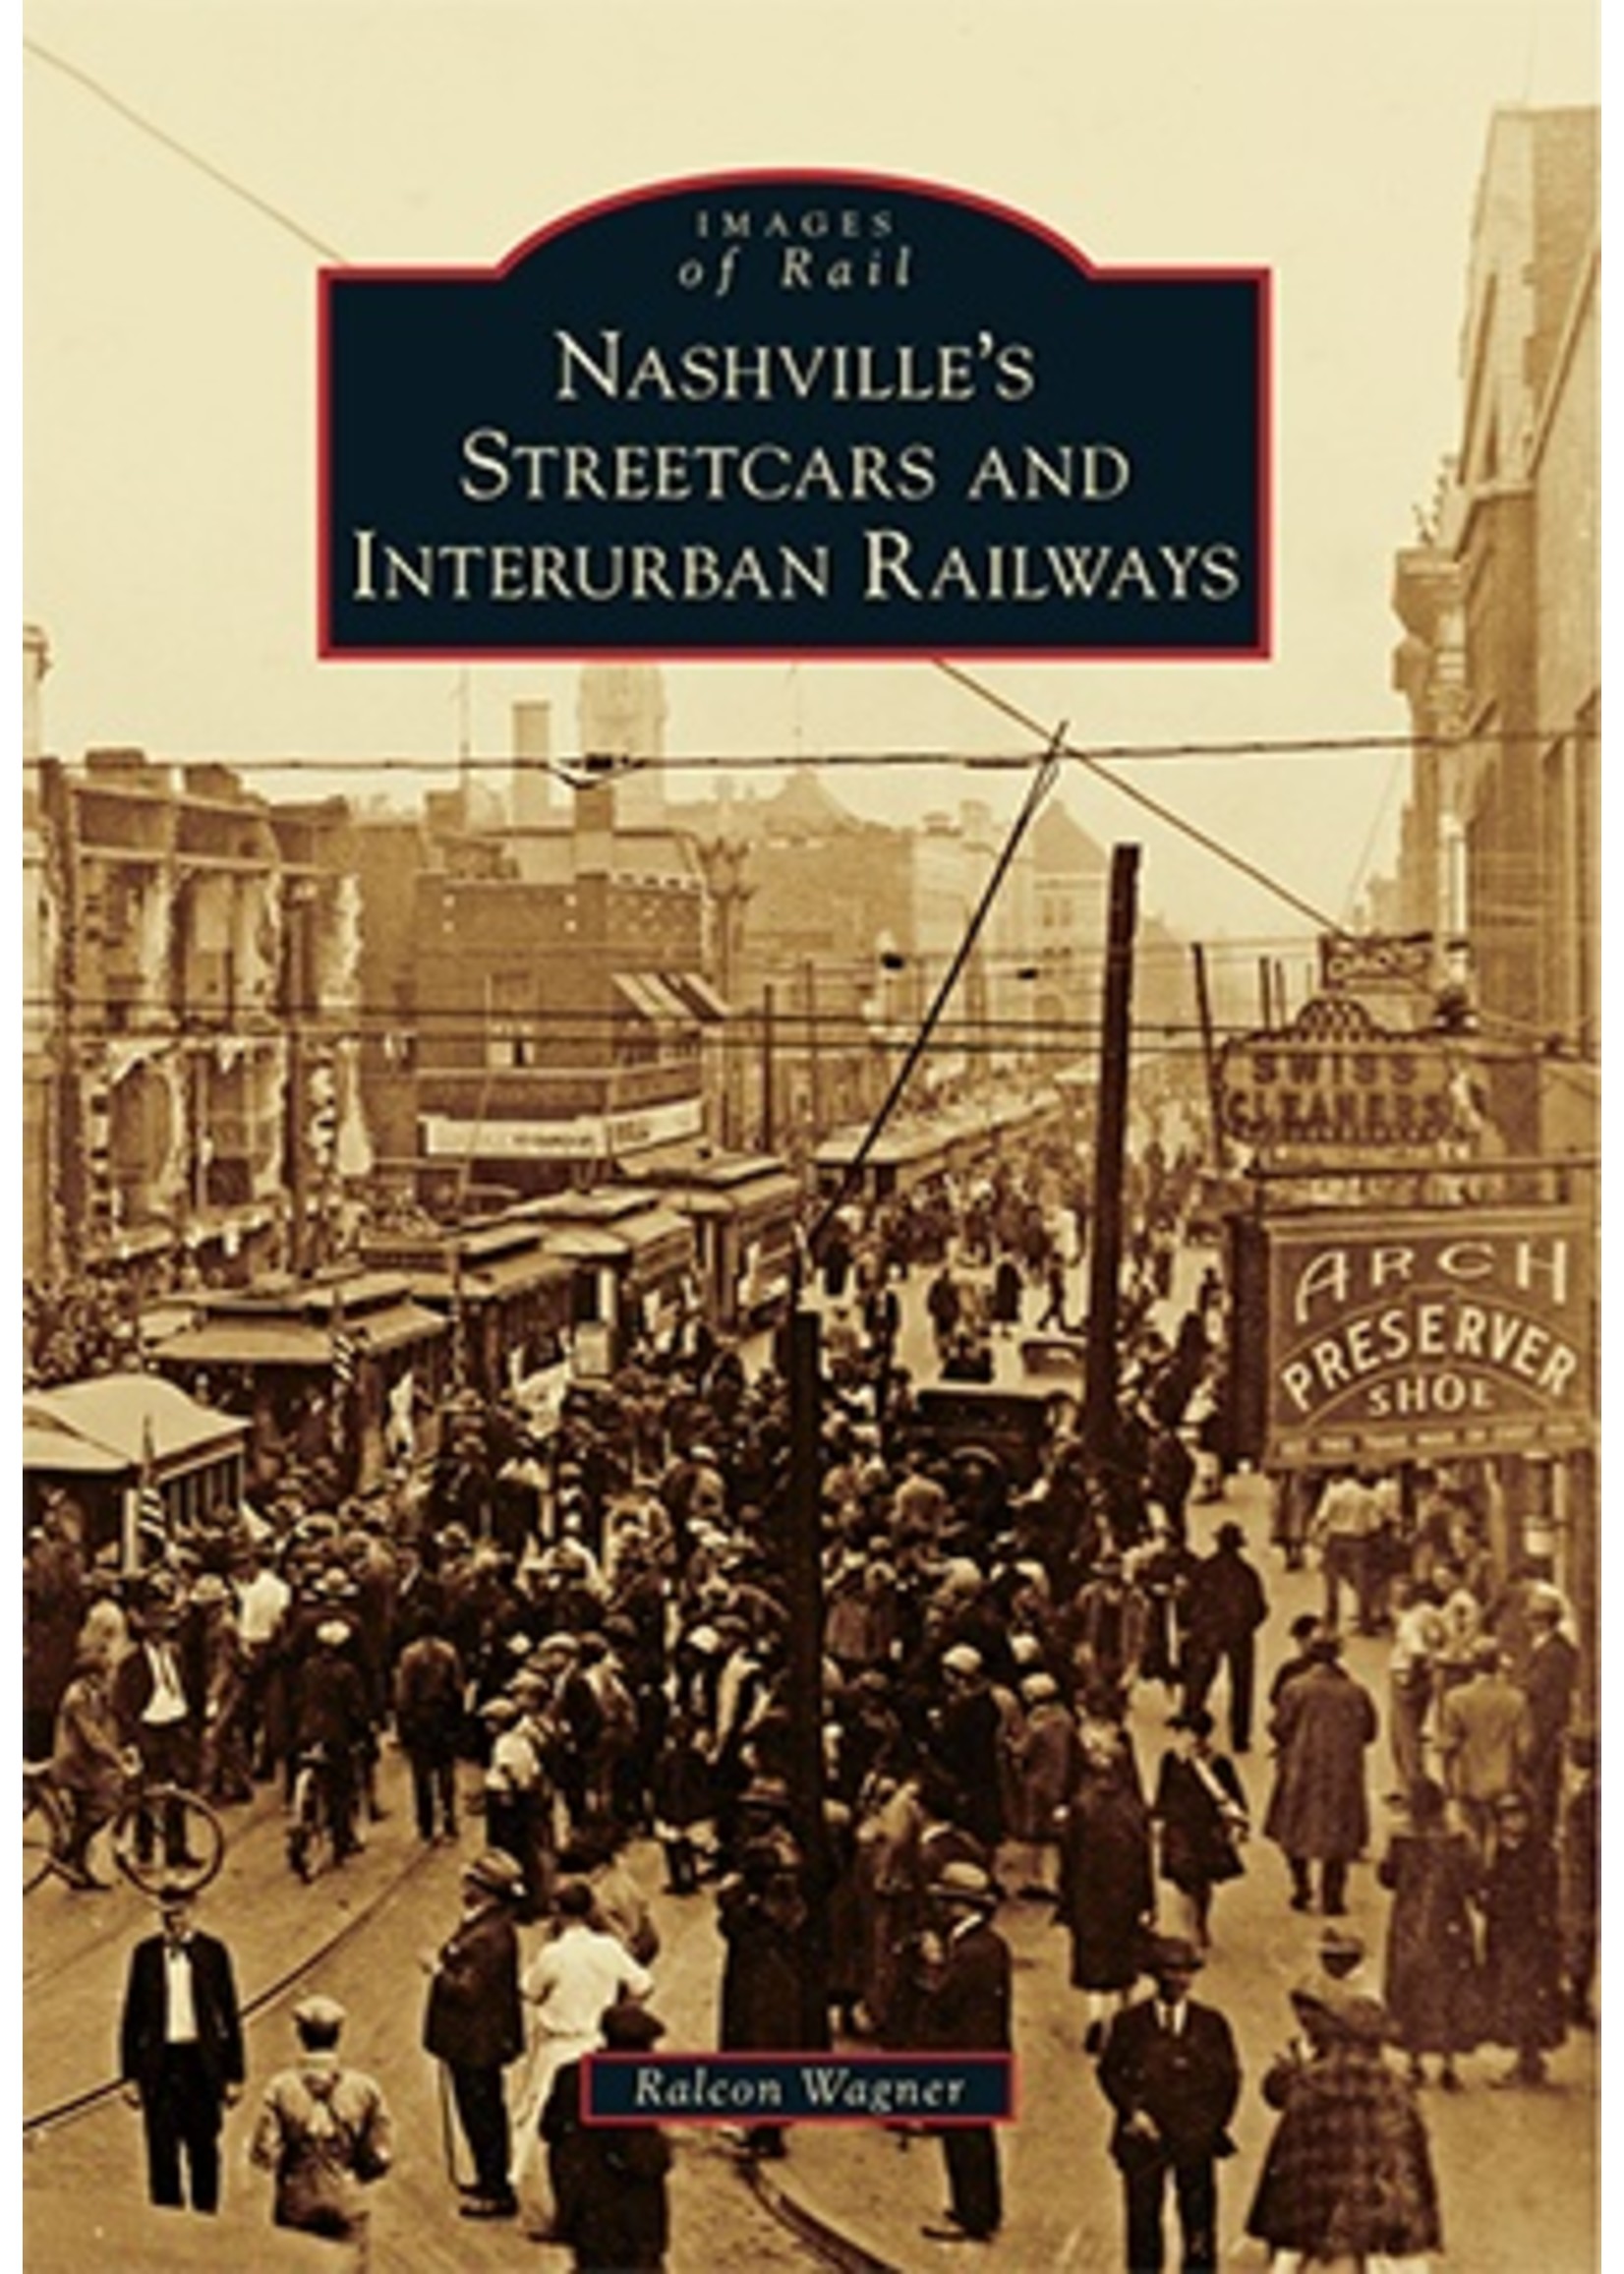 Images of Rail Nashville's Streetcars and Interurban Railways